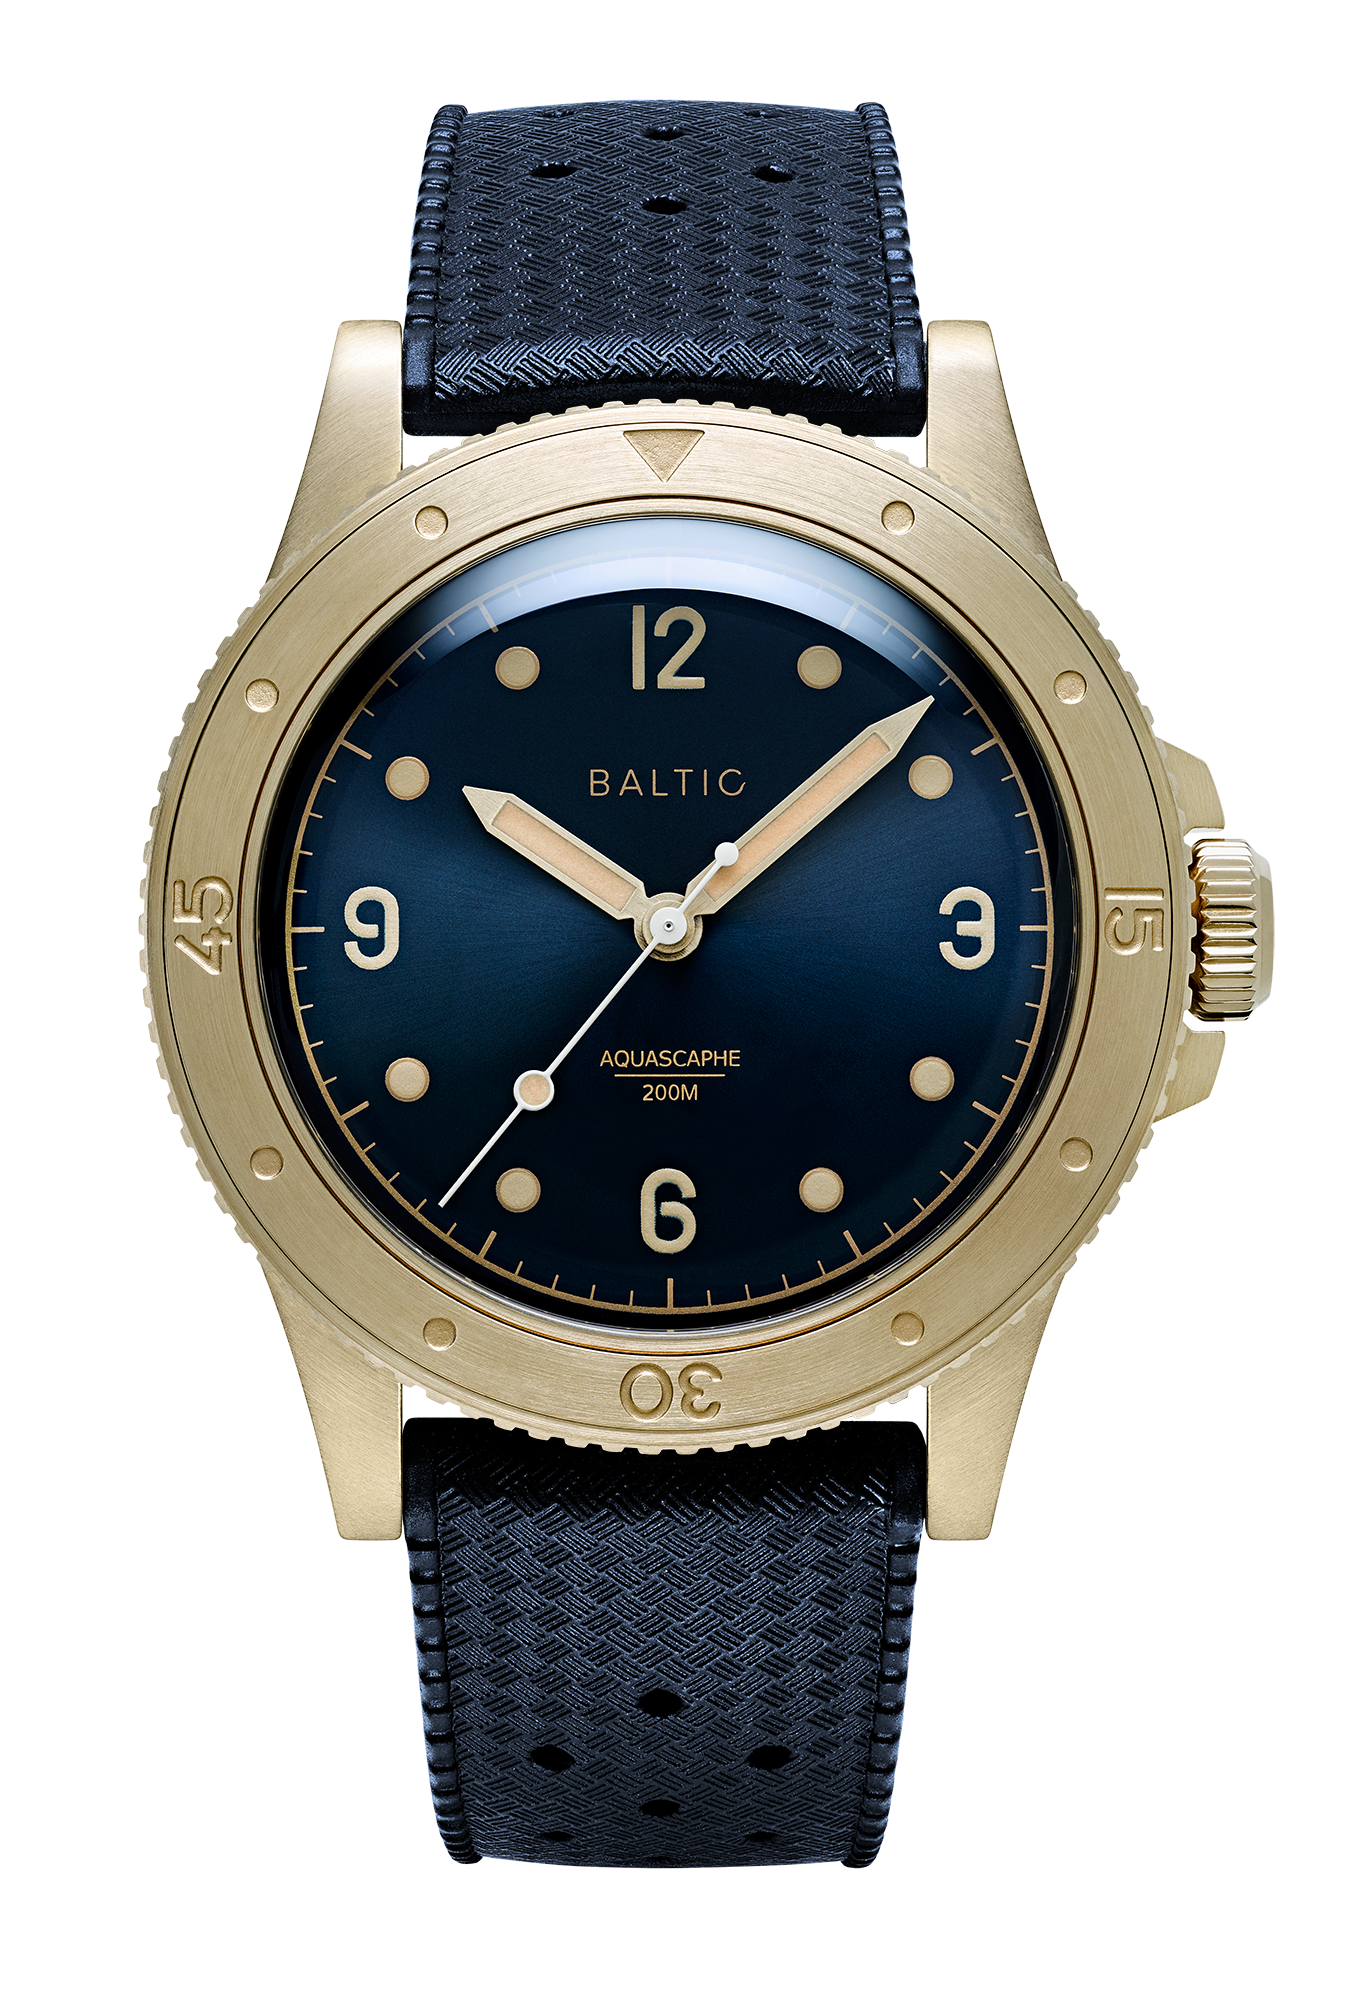 Aquascaphe Classic White - Baltic Watches